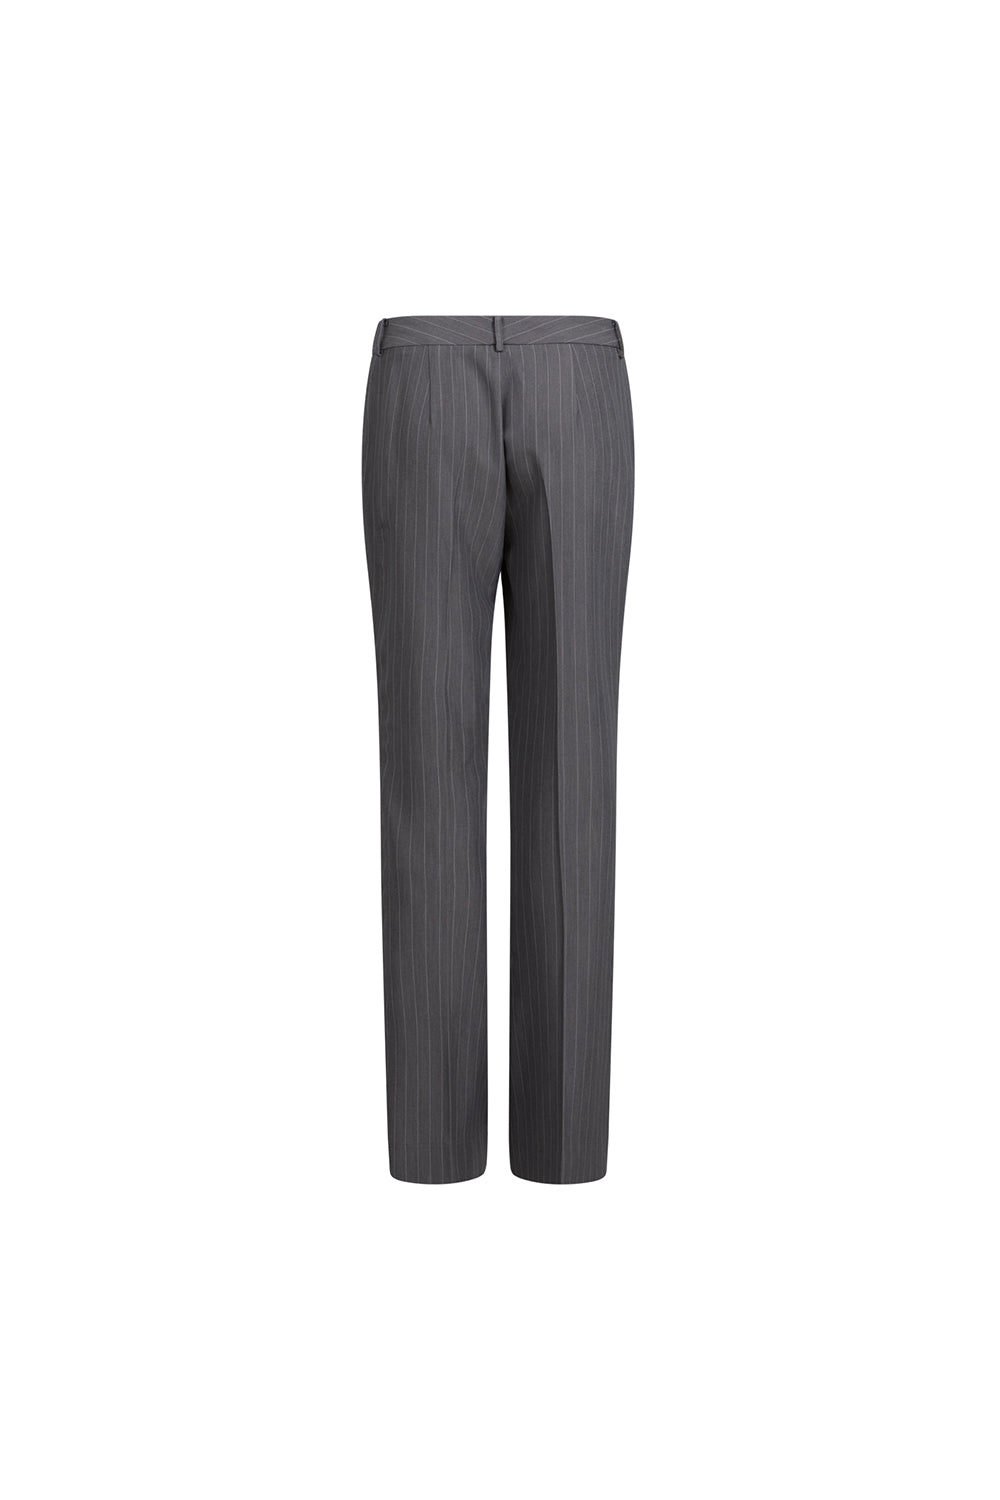 Coster Copenhagen /  Grey Pinstripe Bootcut Pants